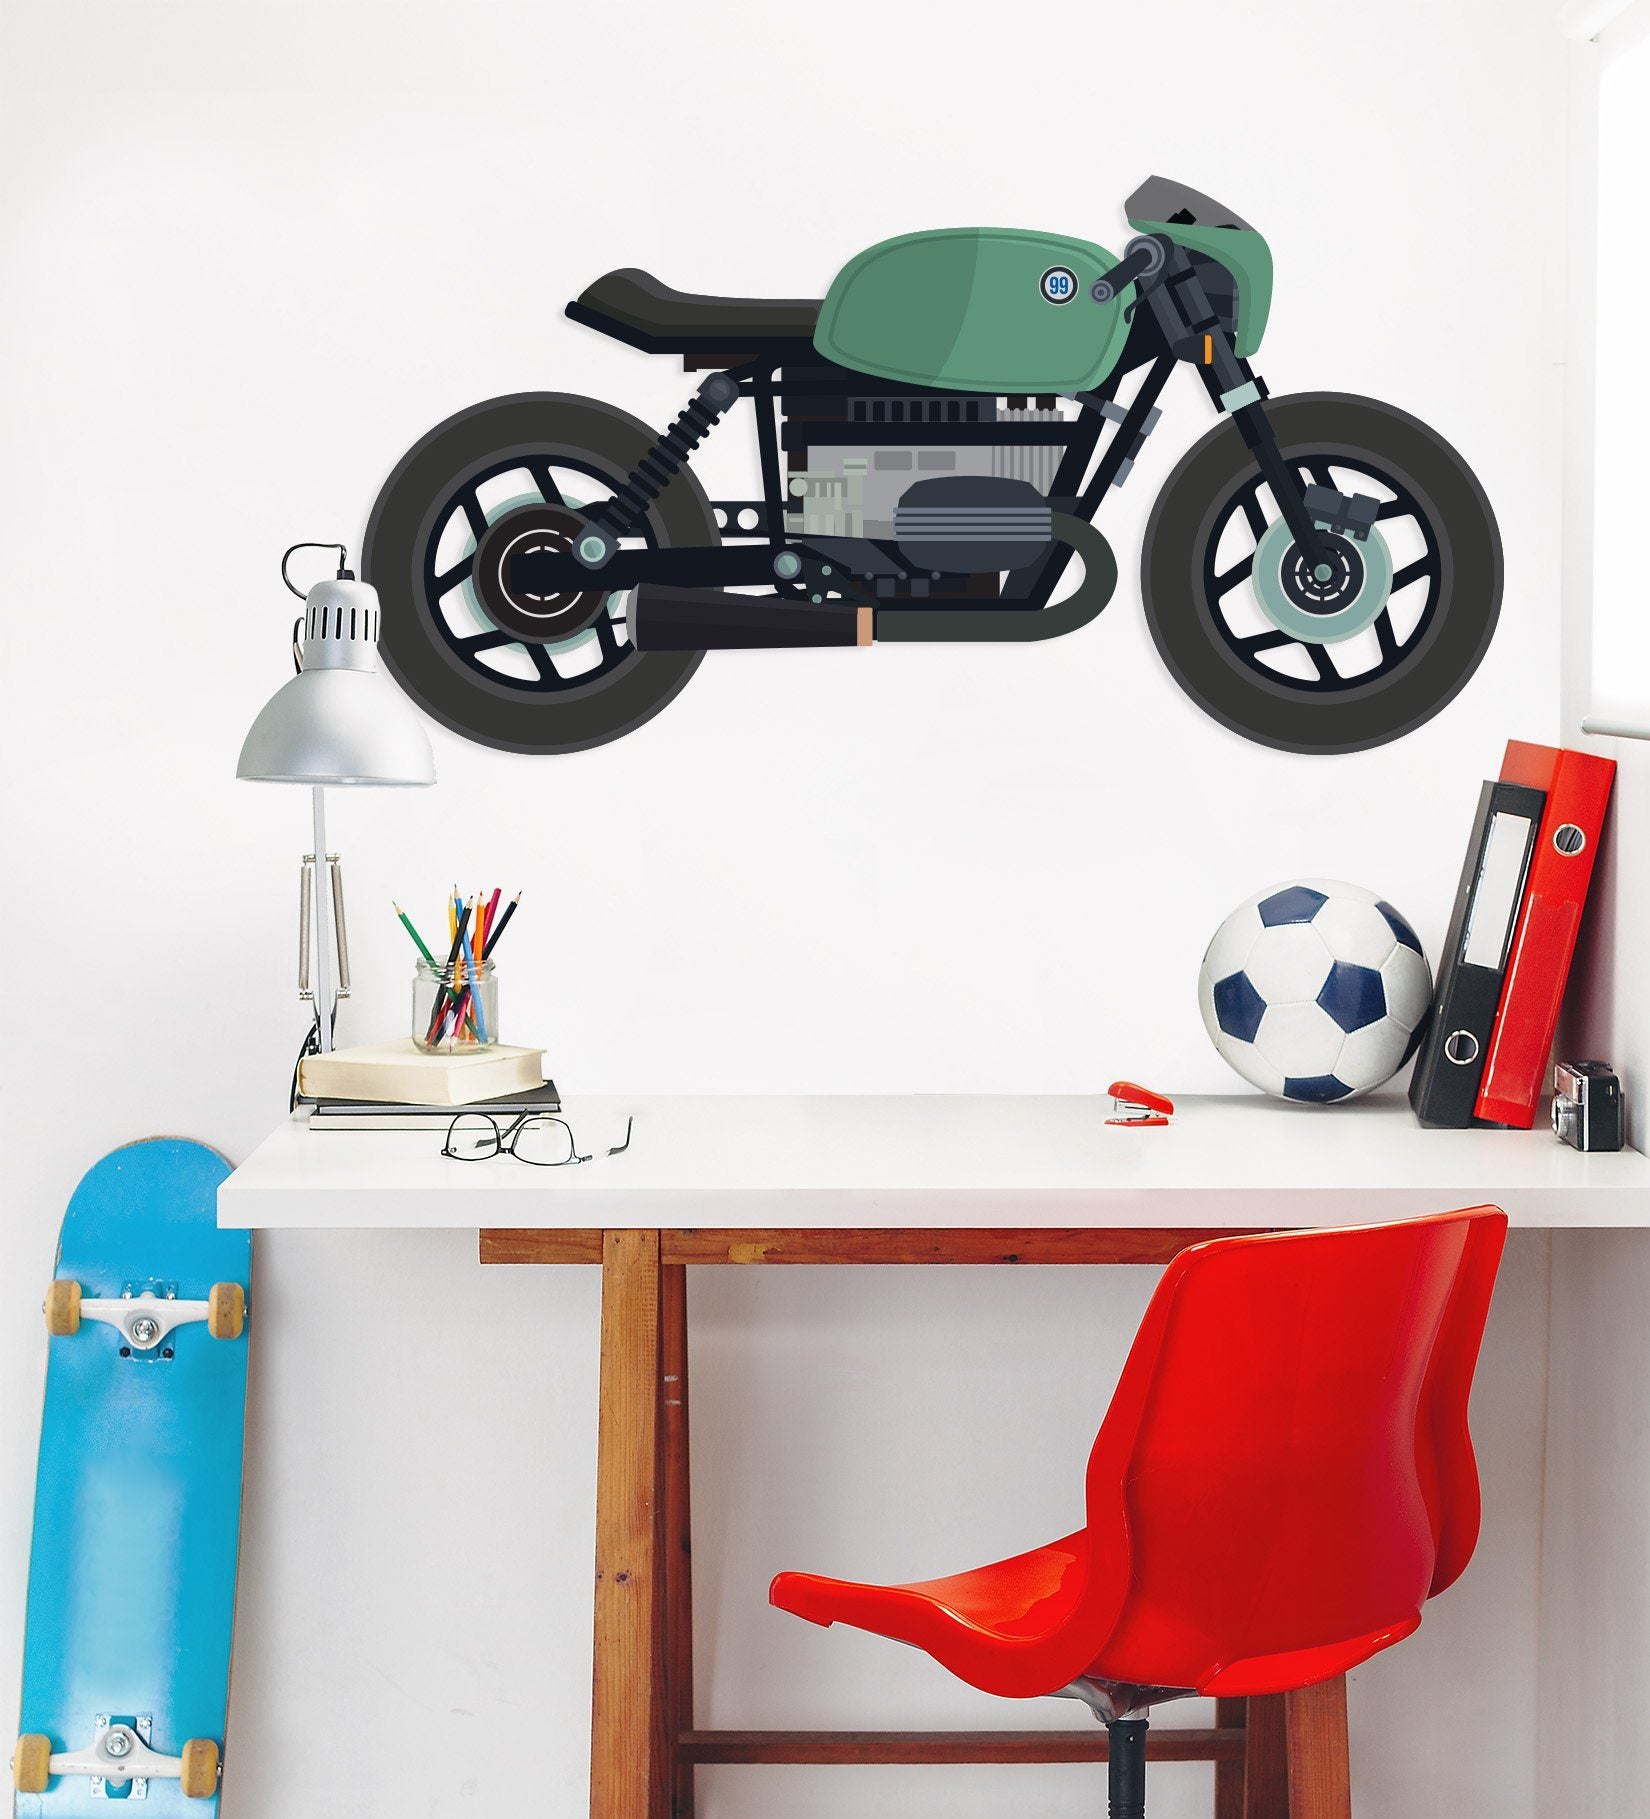 3D Green Motorcycle 258 Vehicles Wallpaper AJ Wallpaper 